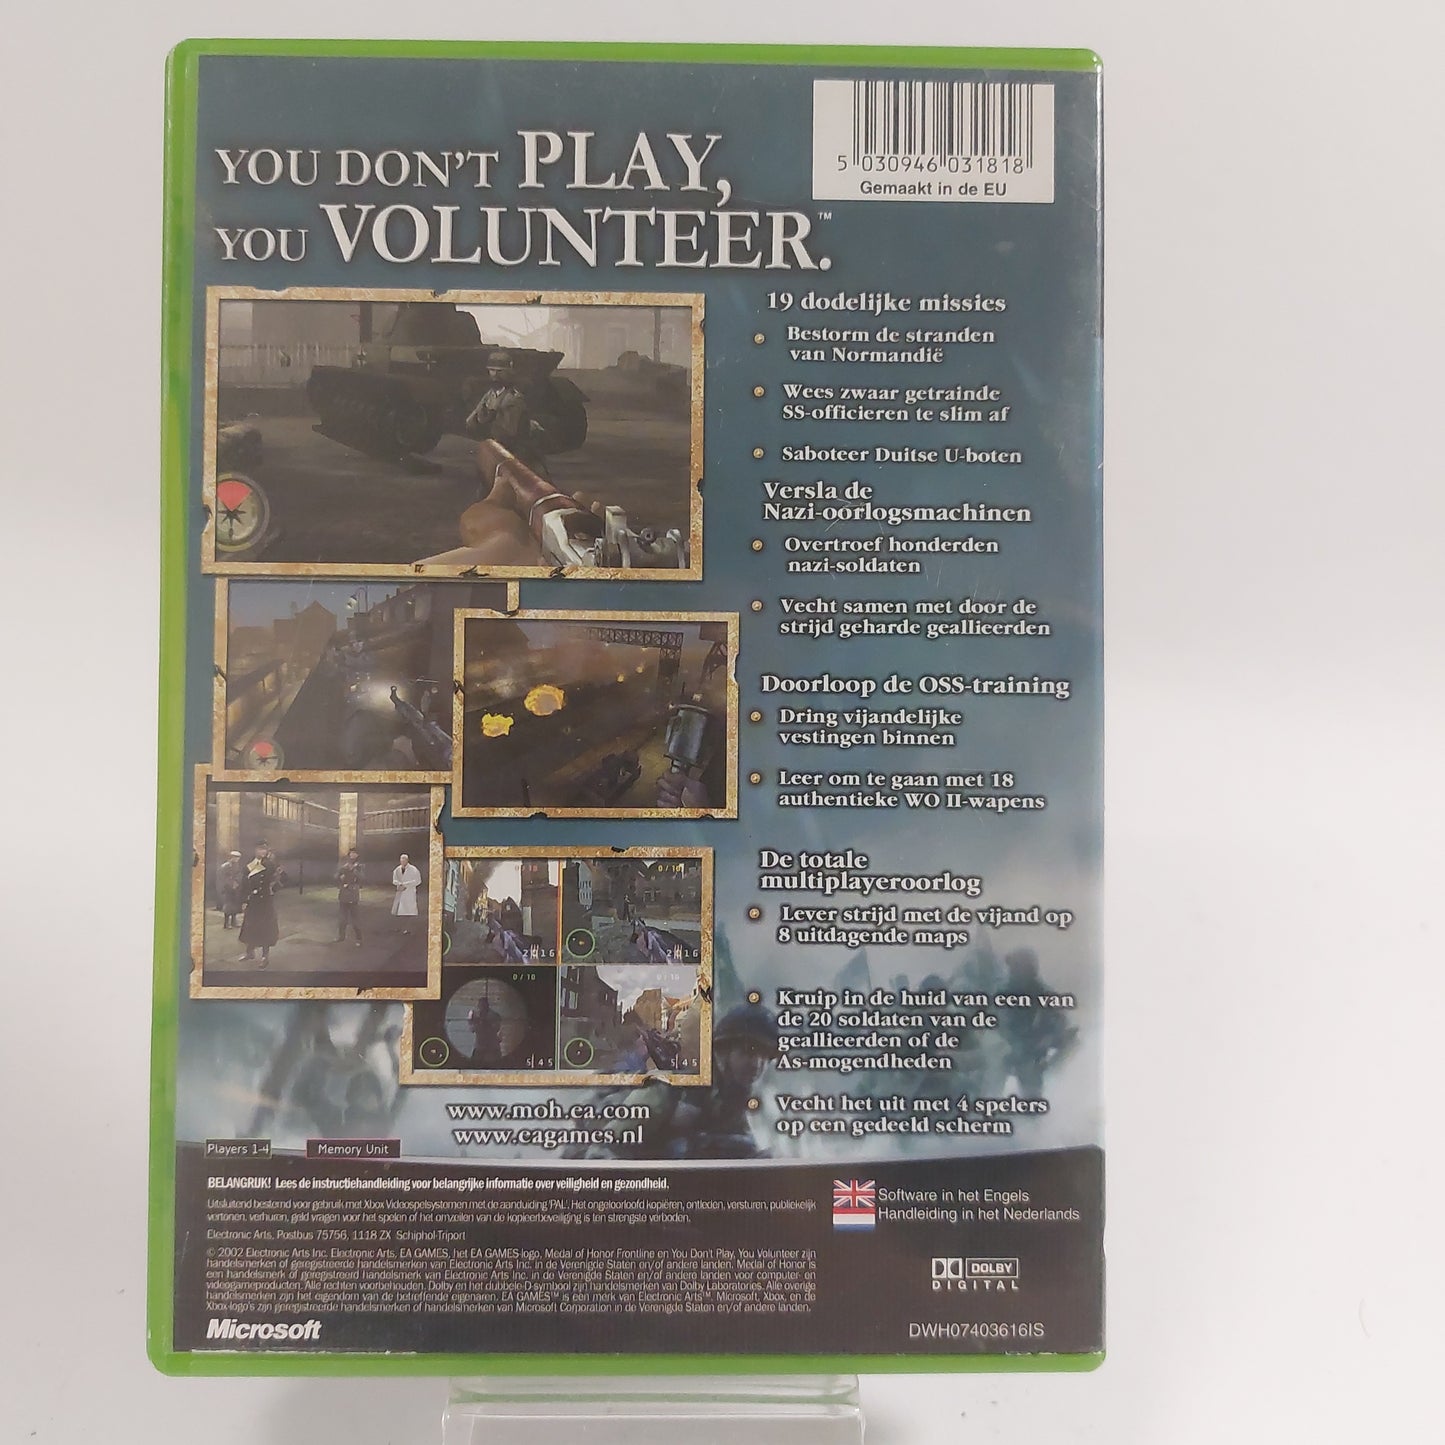 Medal of Honor Frontline Xbox Original